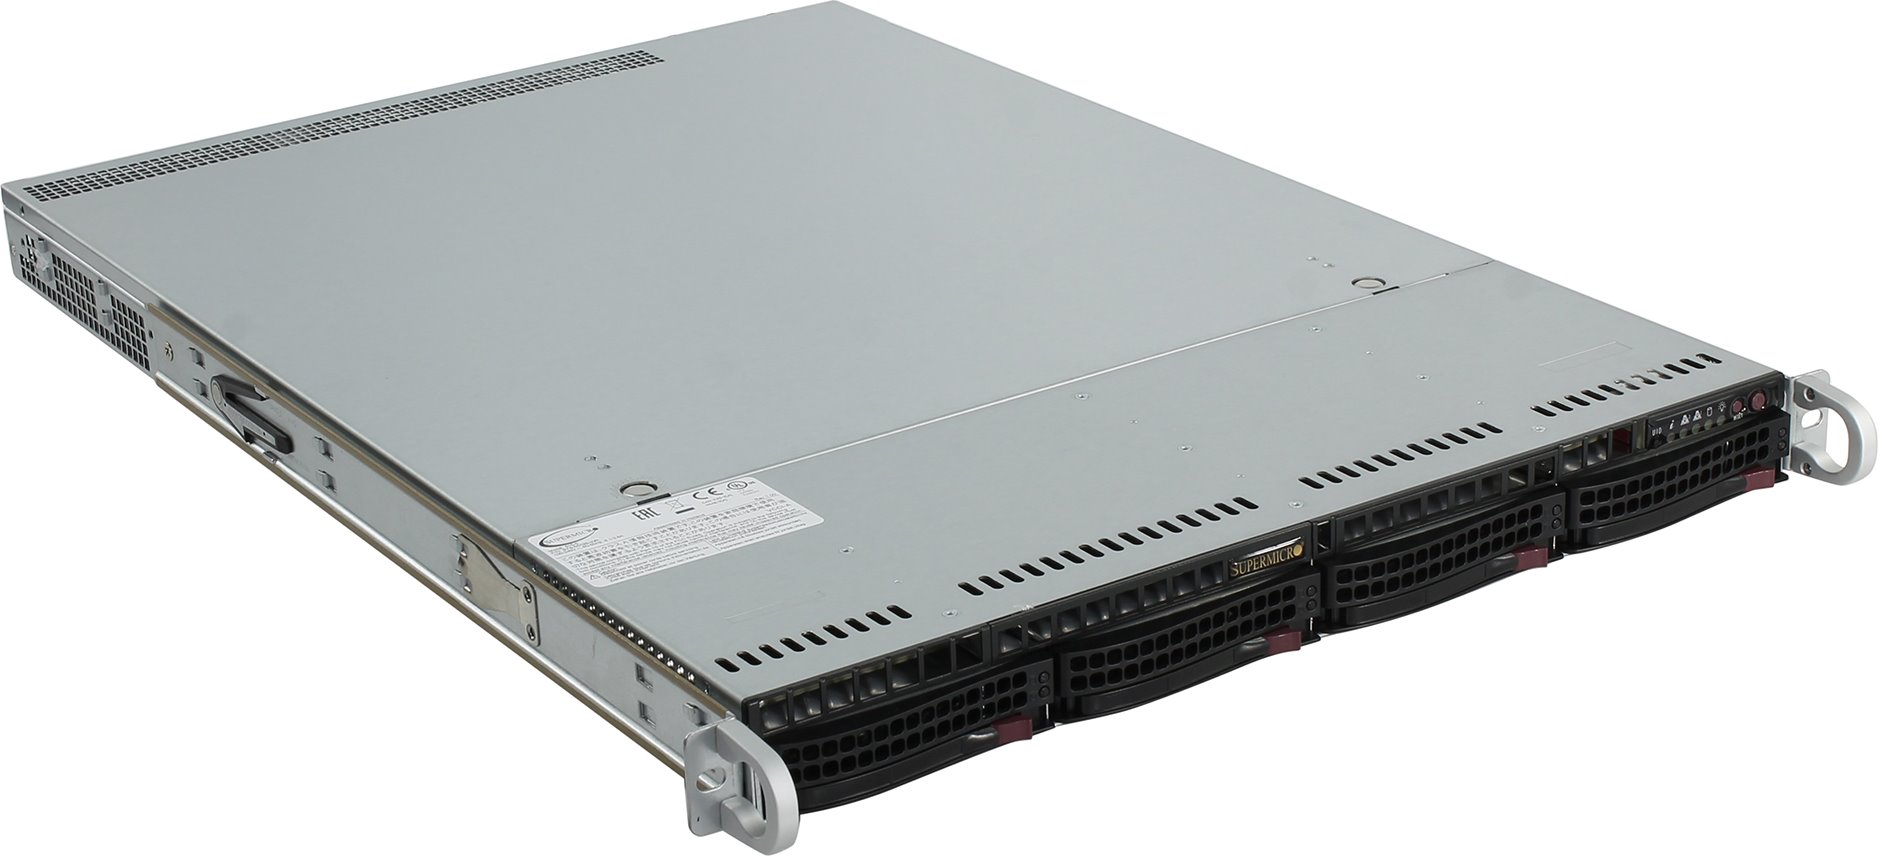 Платформа Supermicro SuperServer 1U 6019P-WTR noCPU(2)Scalable/TDP 70-165W/ no DIMM(12)/ SATARAID HDD(4)LFF/ 2xGbE/ 2xFH, 1xLP, M2/ 2x750W